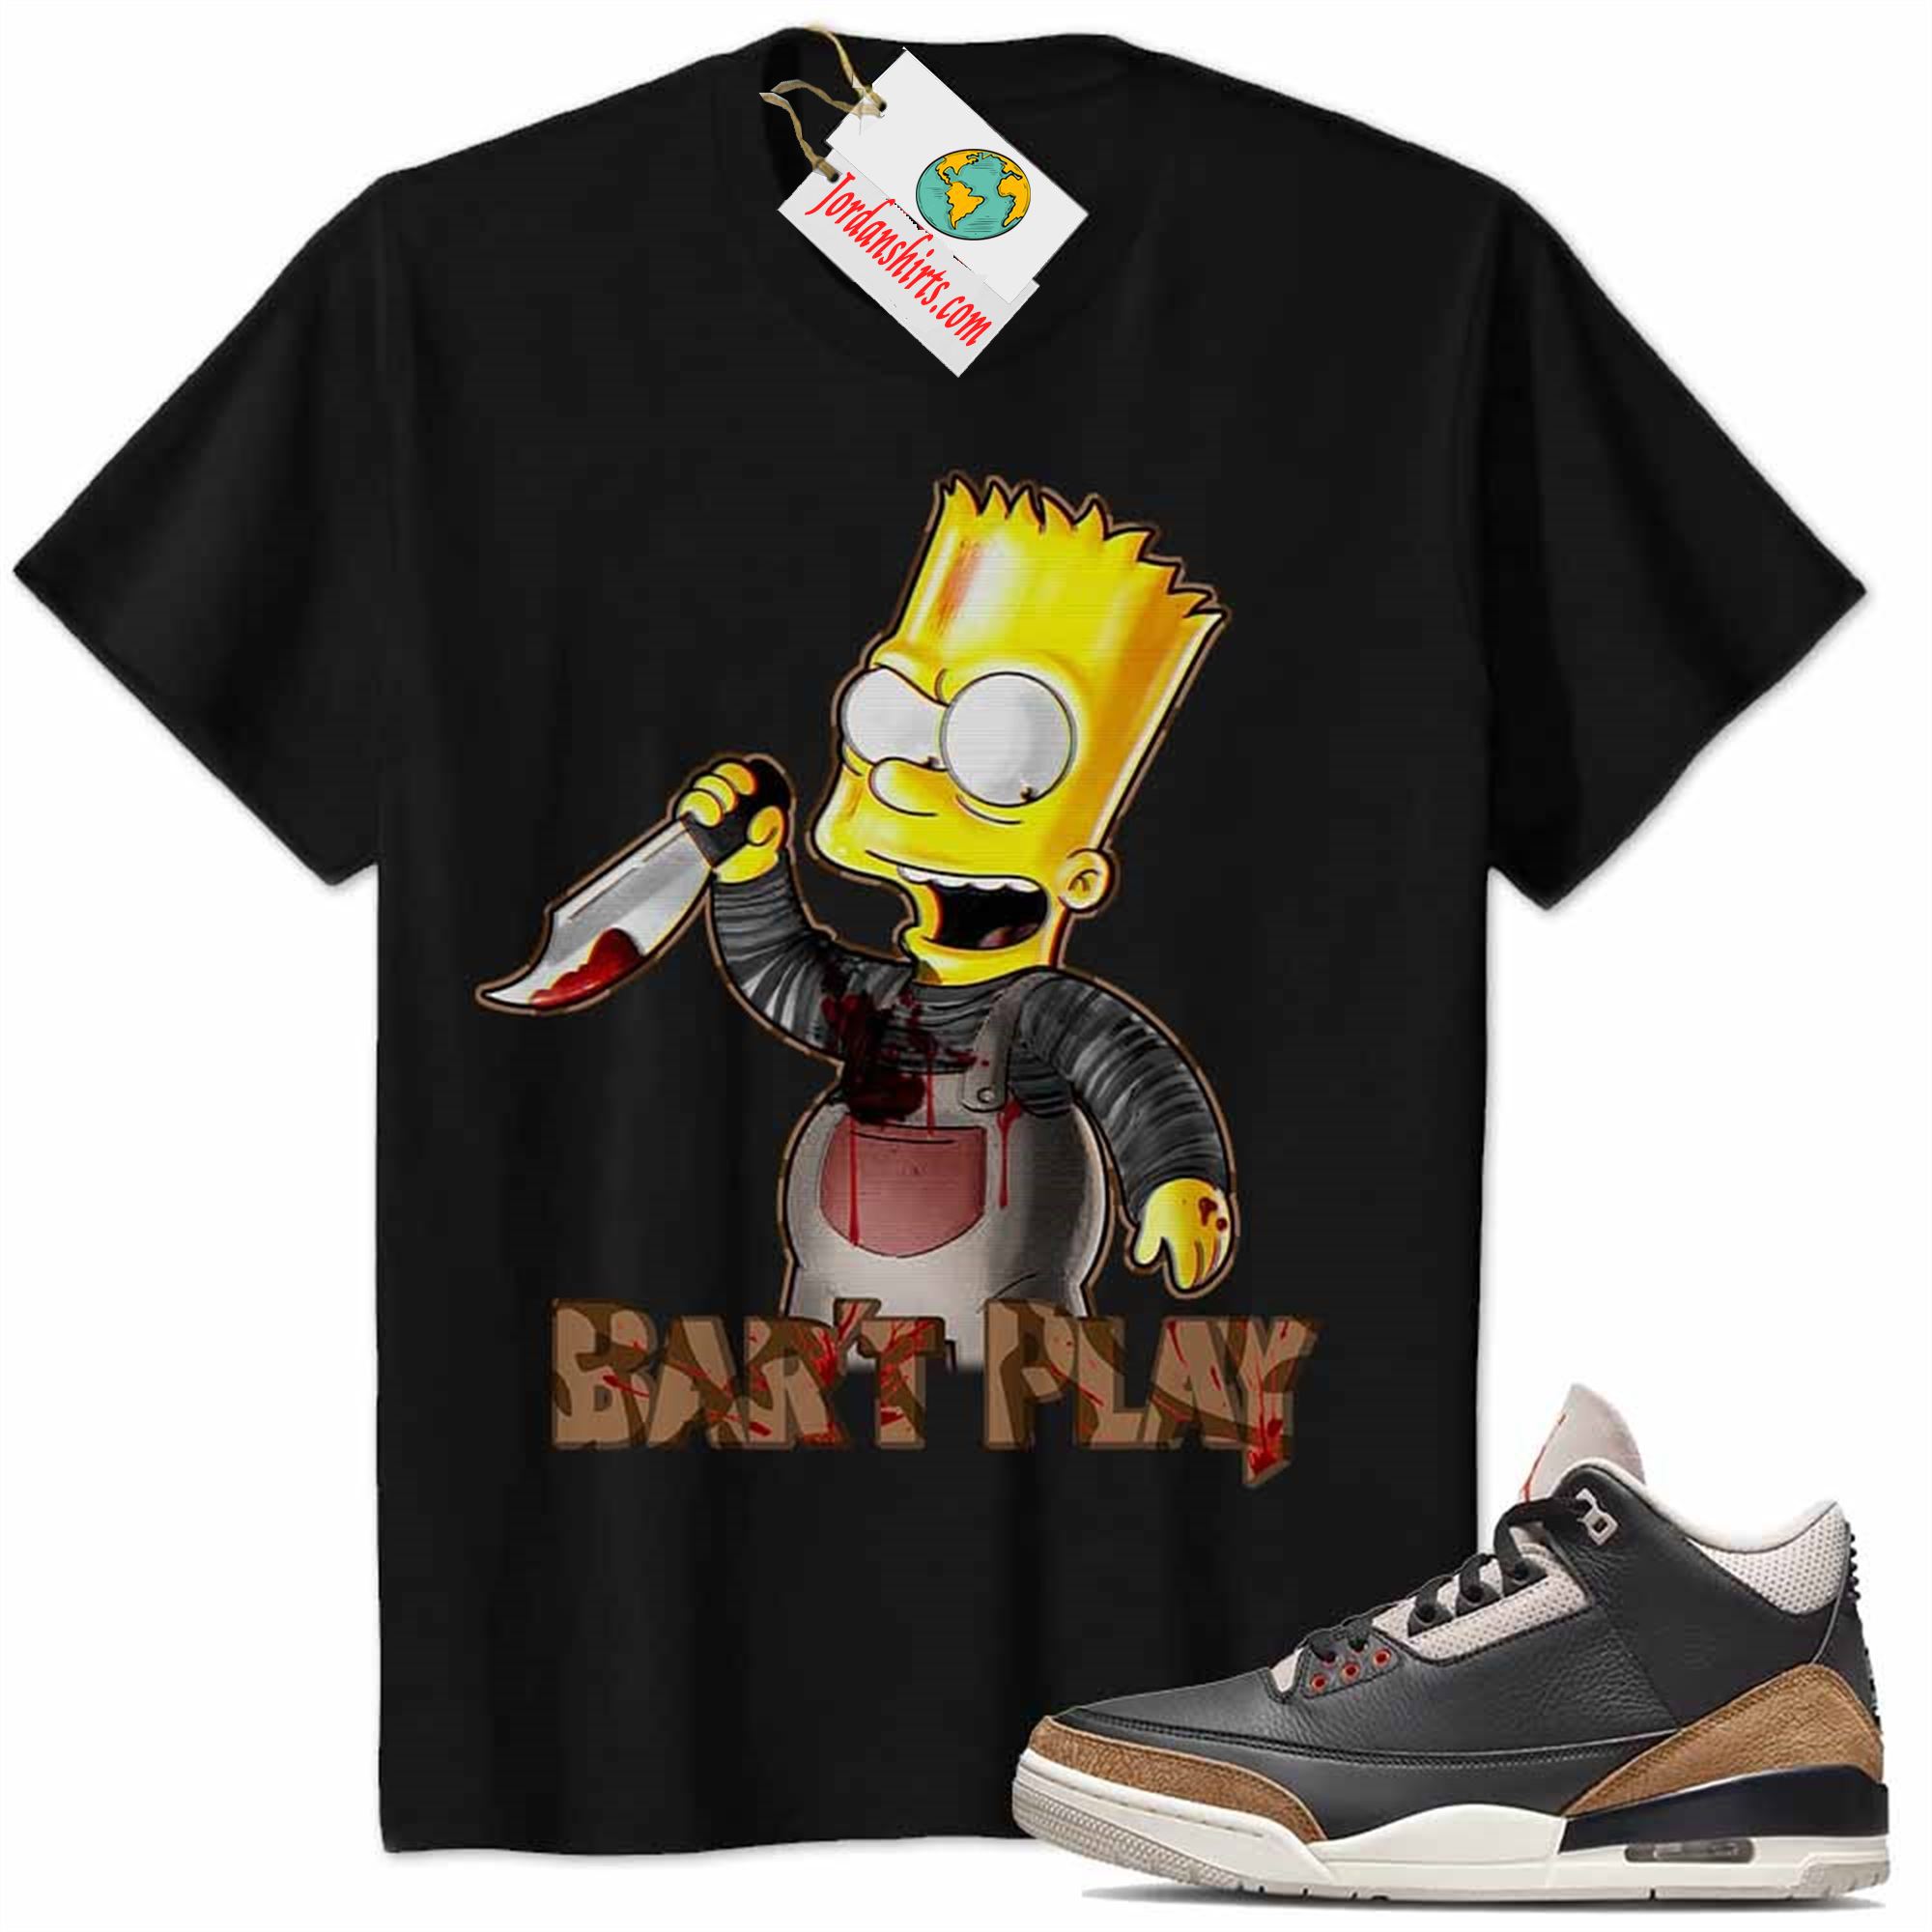 Jordan 3 Shirt, Jordan 3 Desert Elephant Shirt Shirt Bart Chucky Simpson Wanna Play Black Plus Size Up To 5xl